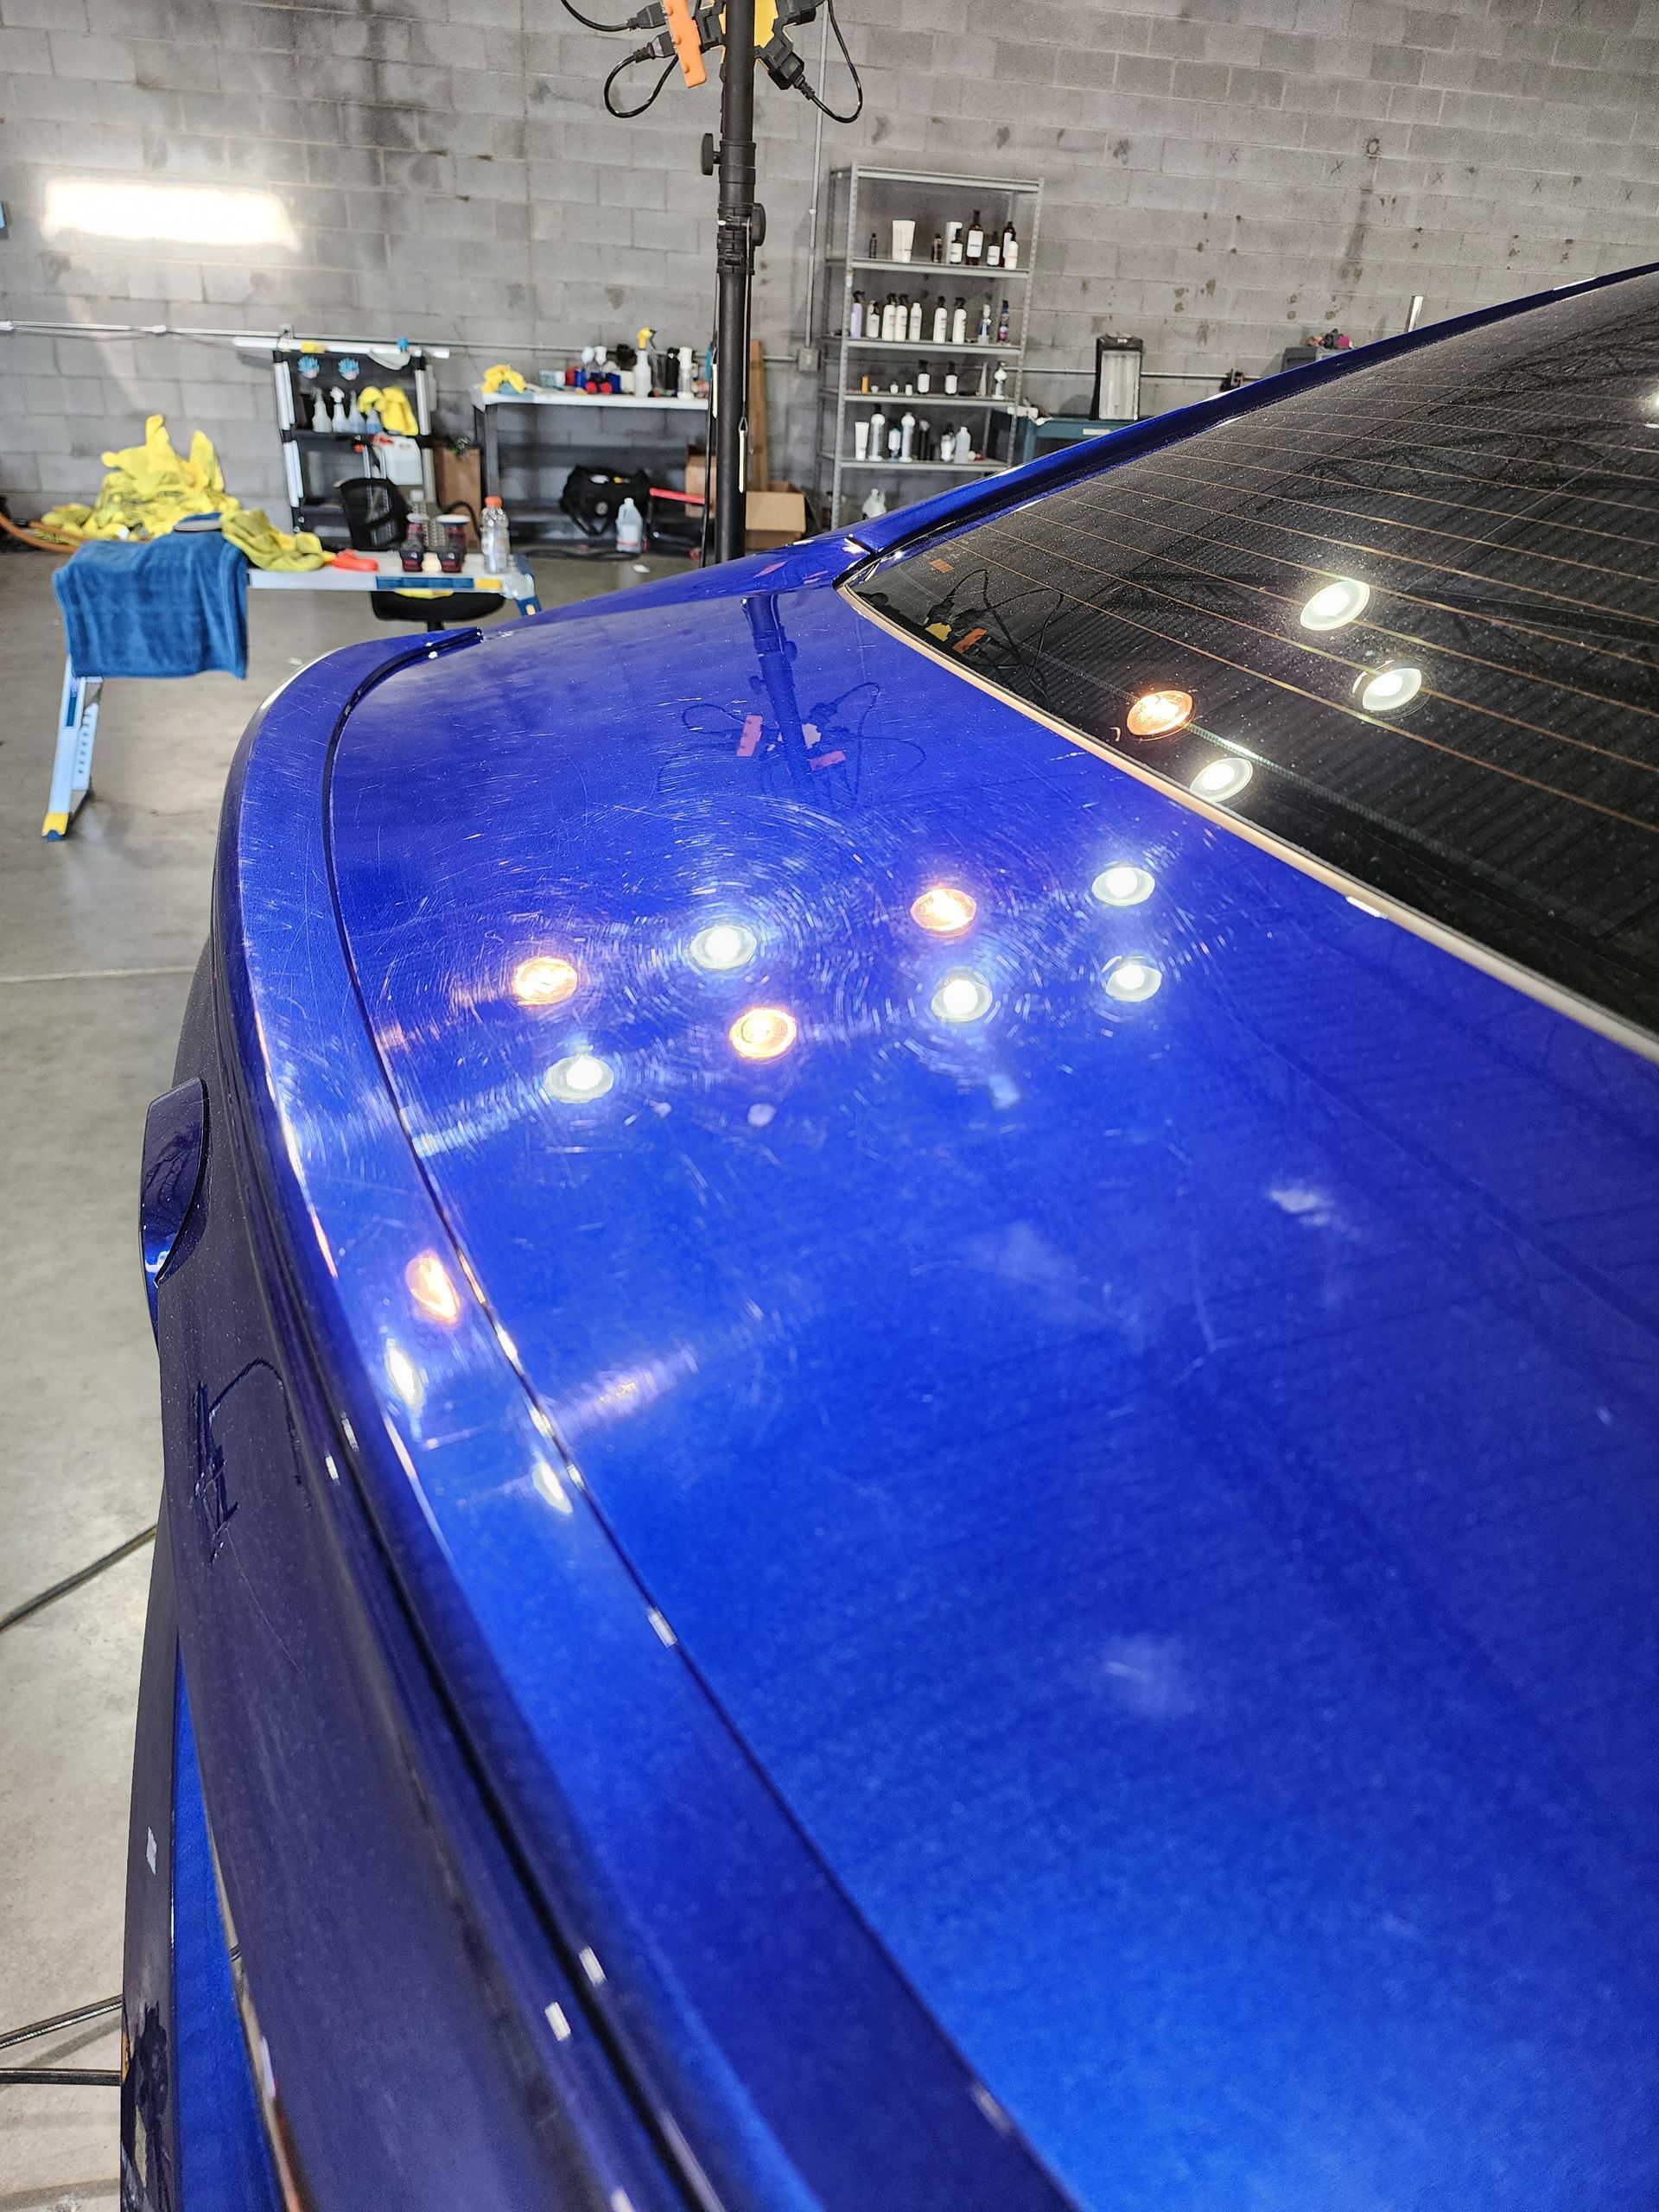 A close up of a blue car 's hood in a garage.